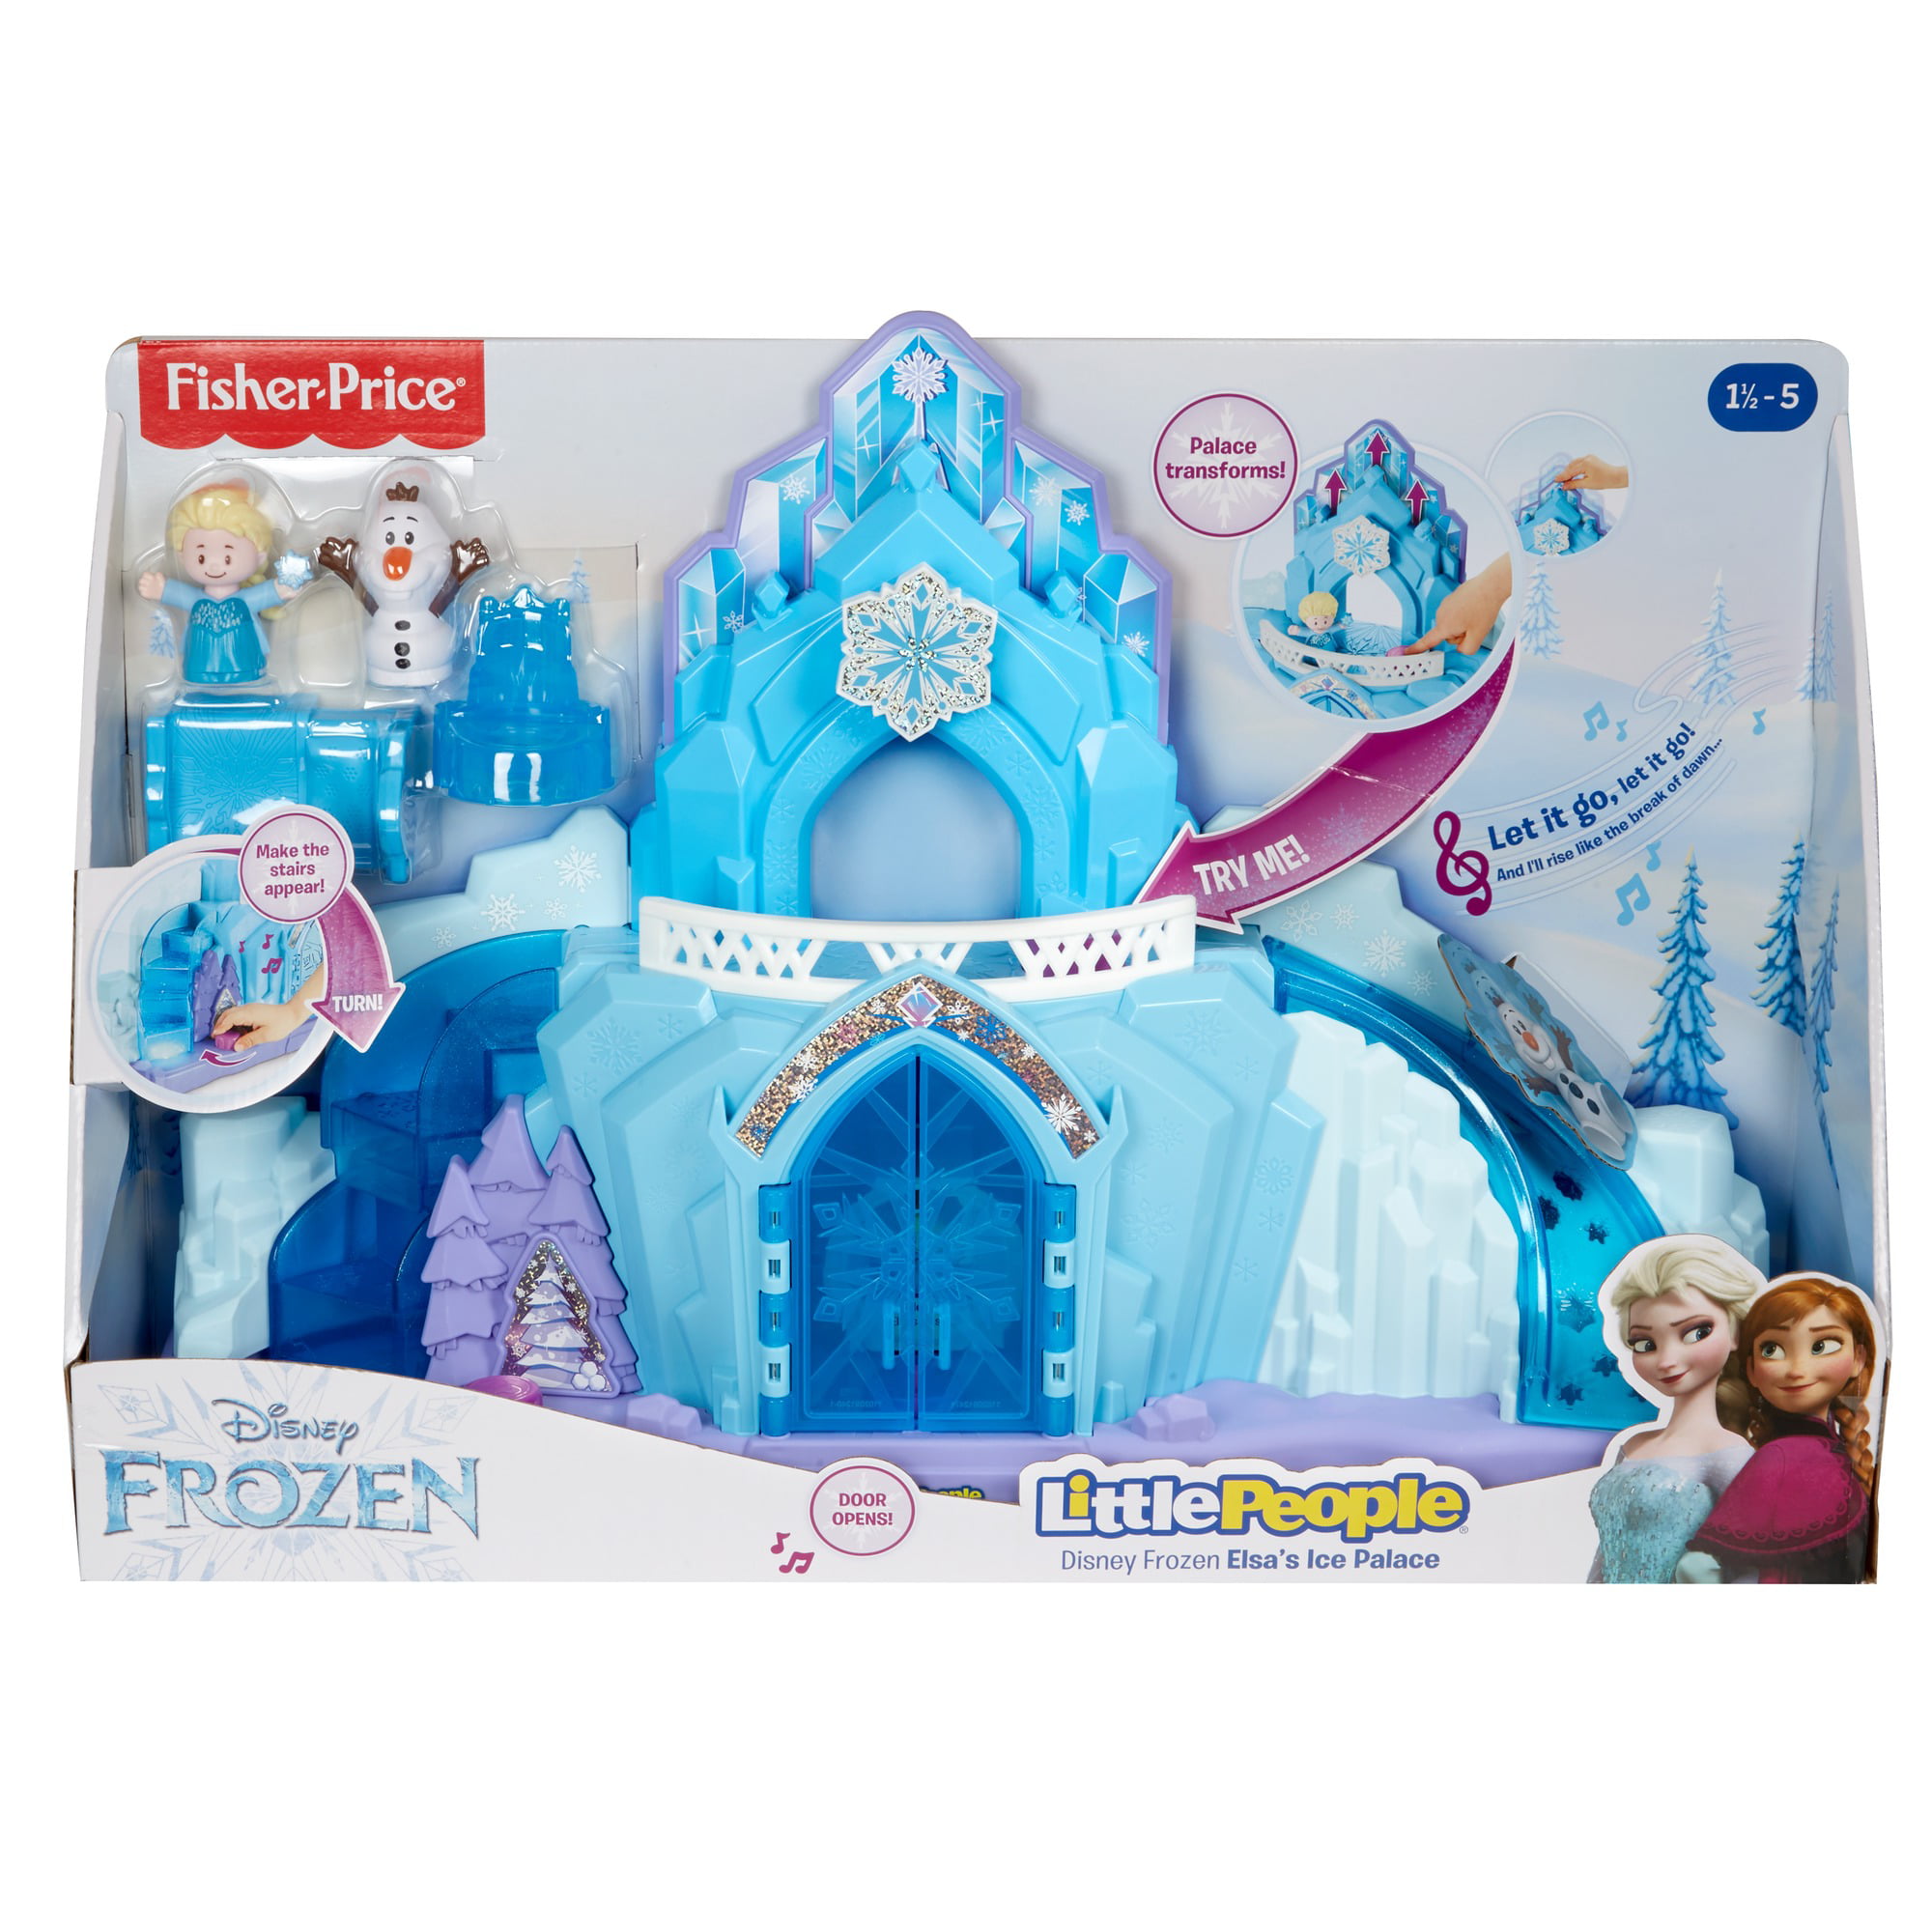 Frozen Elsa's Ice Palace by Little People 